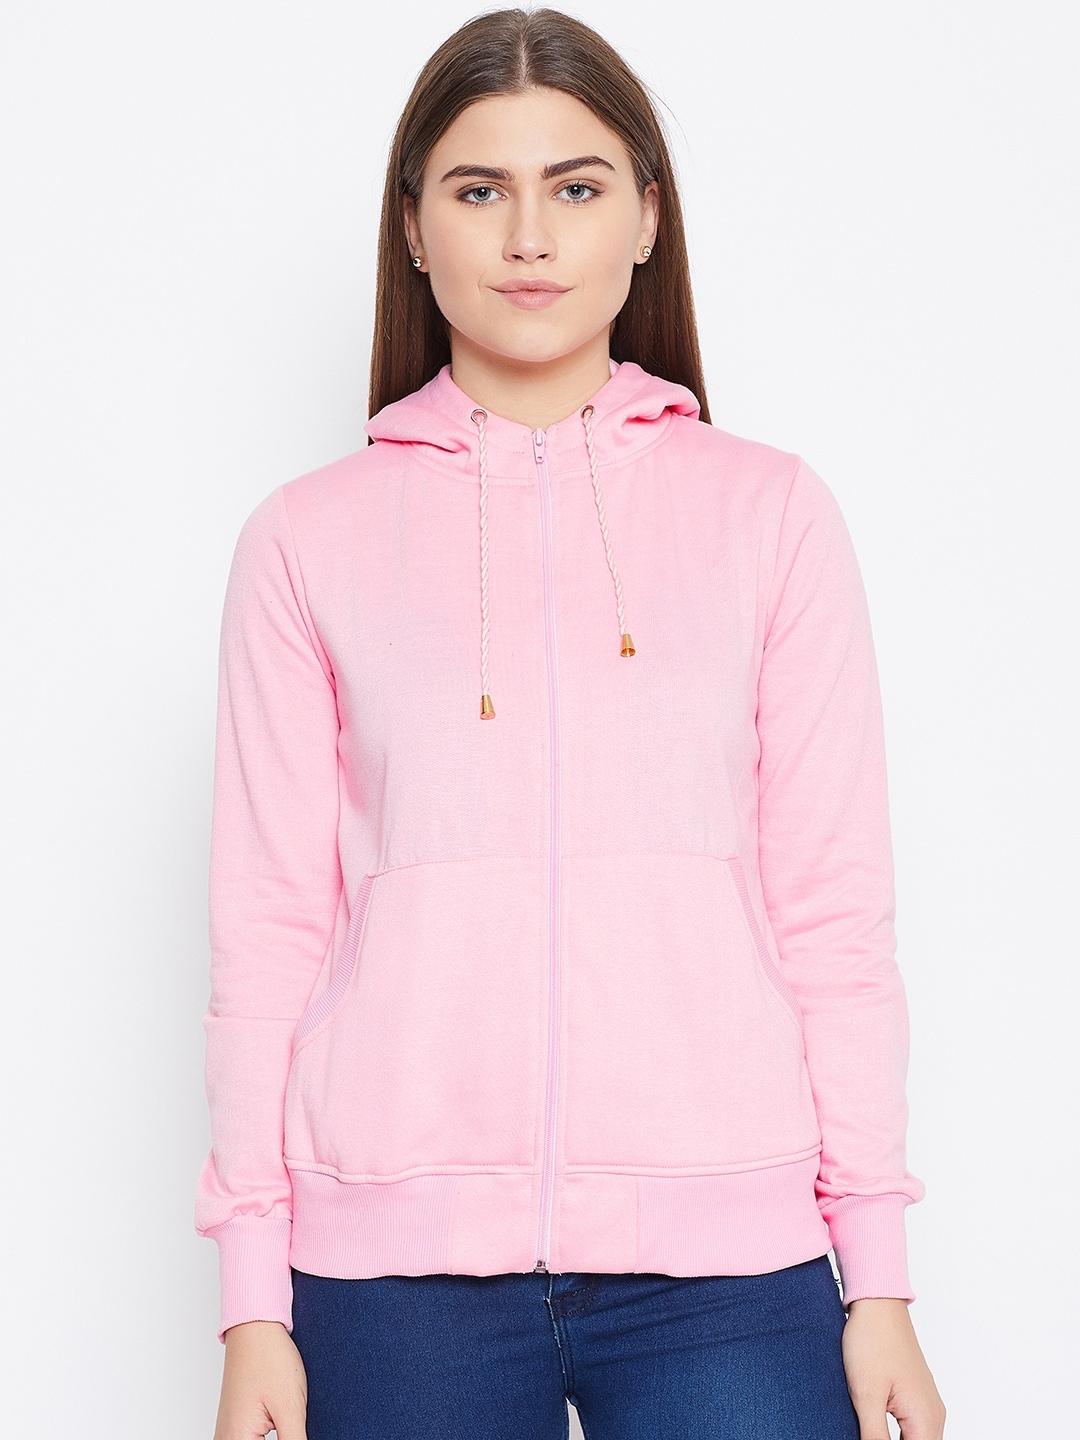 alsace lorraine paris women pink solid hooded sweatshirt